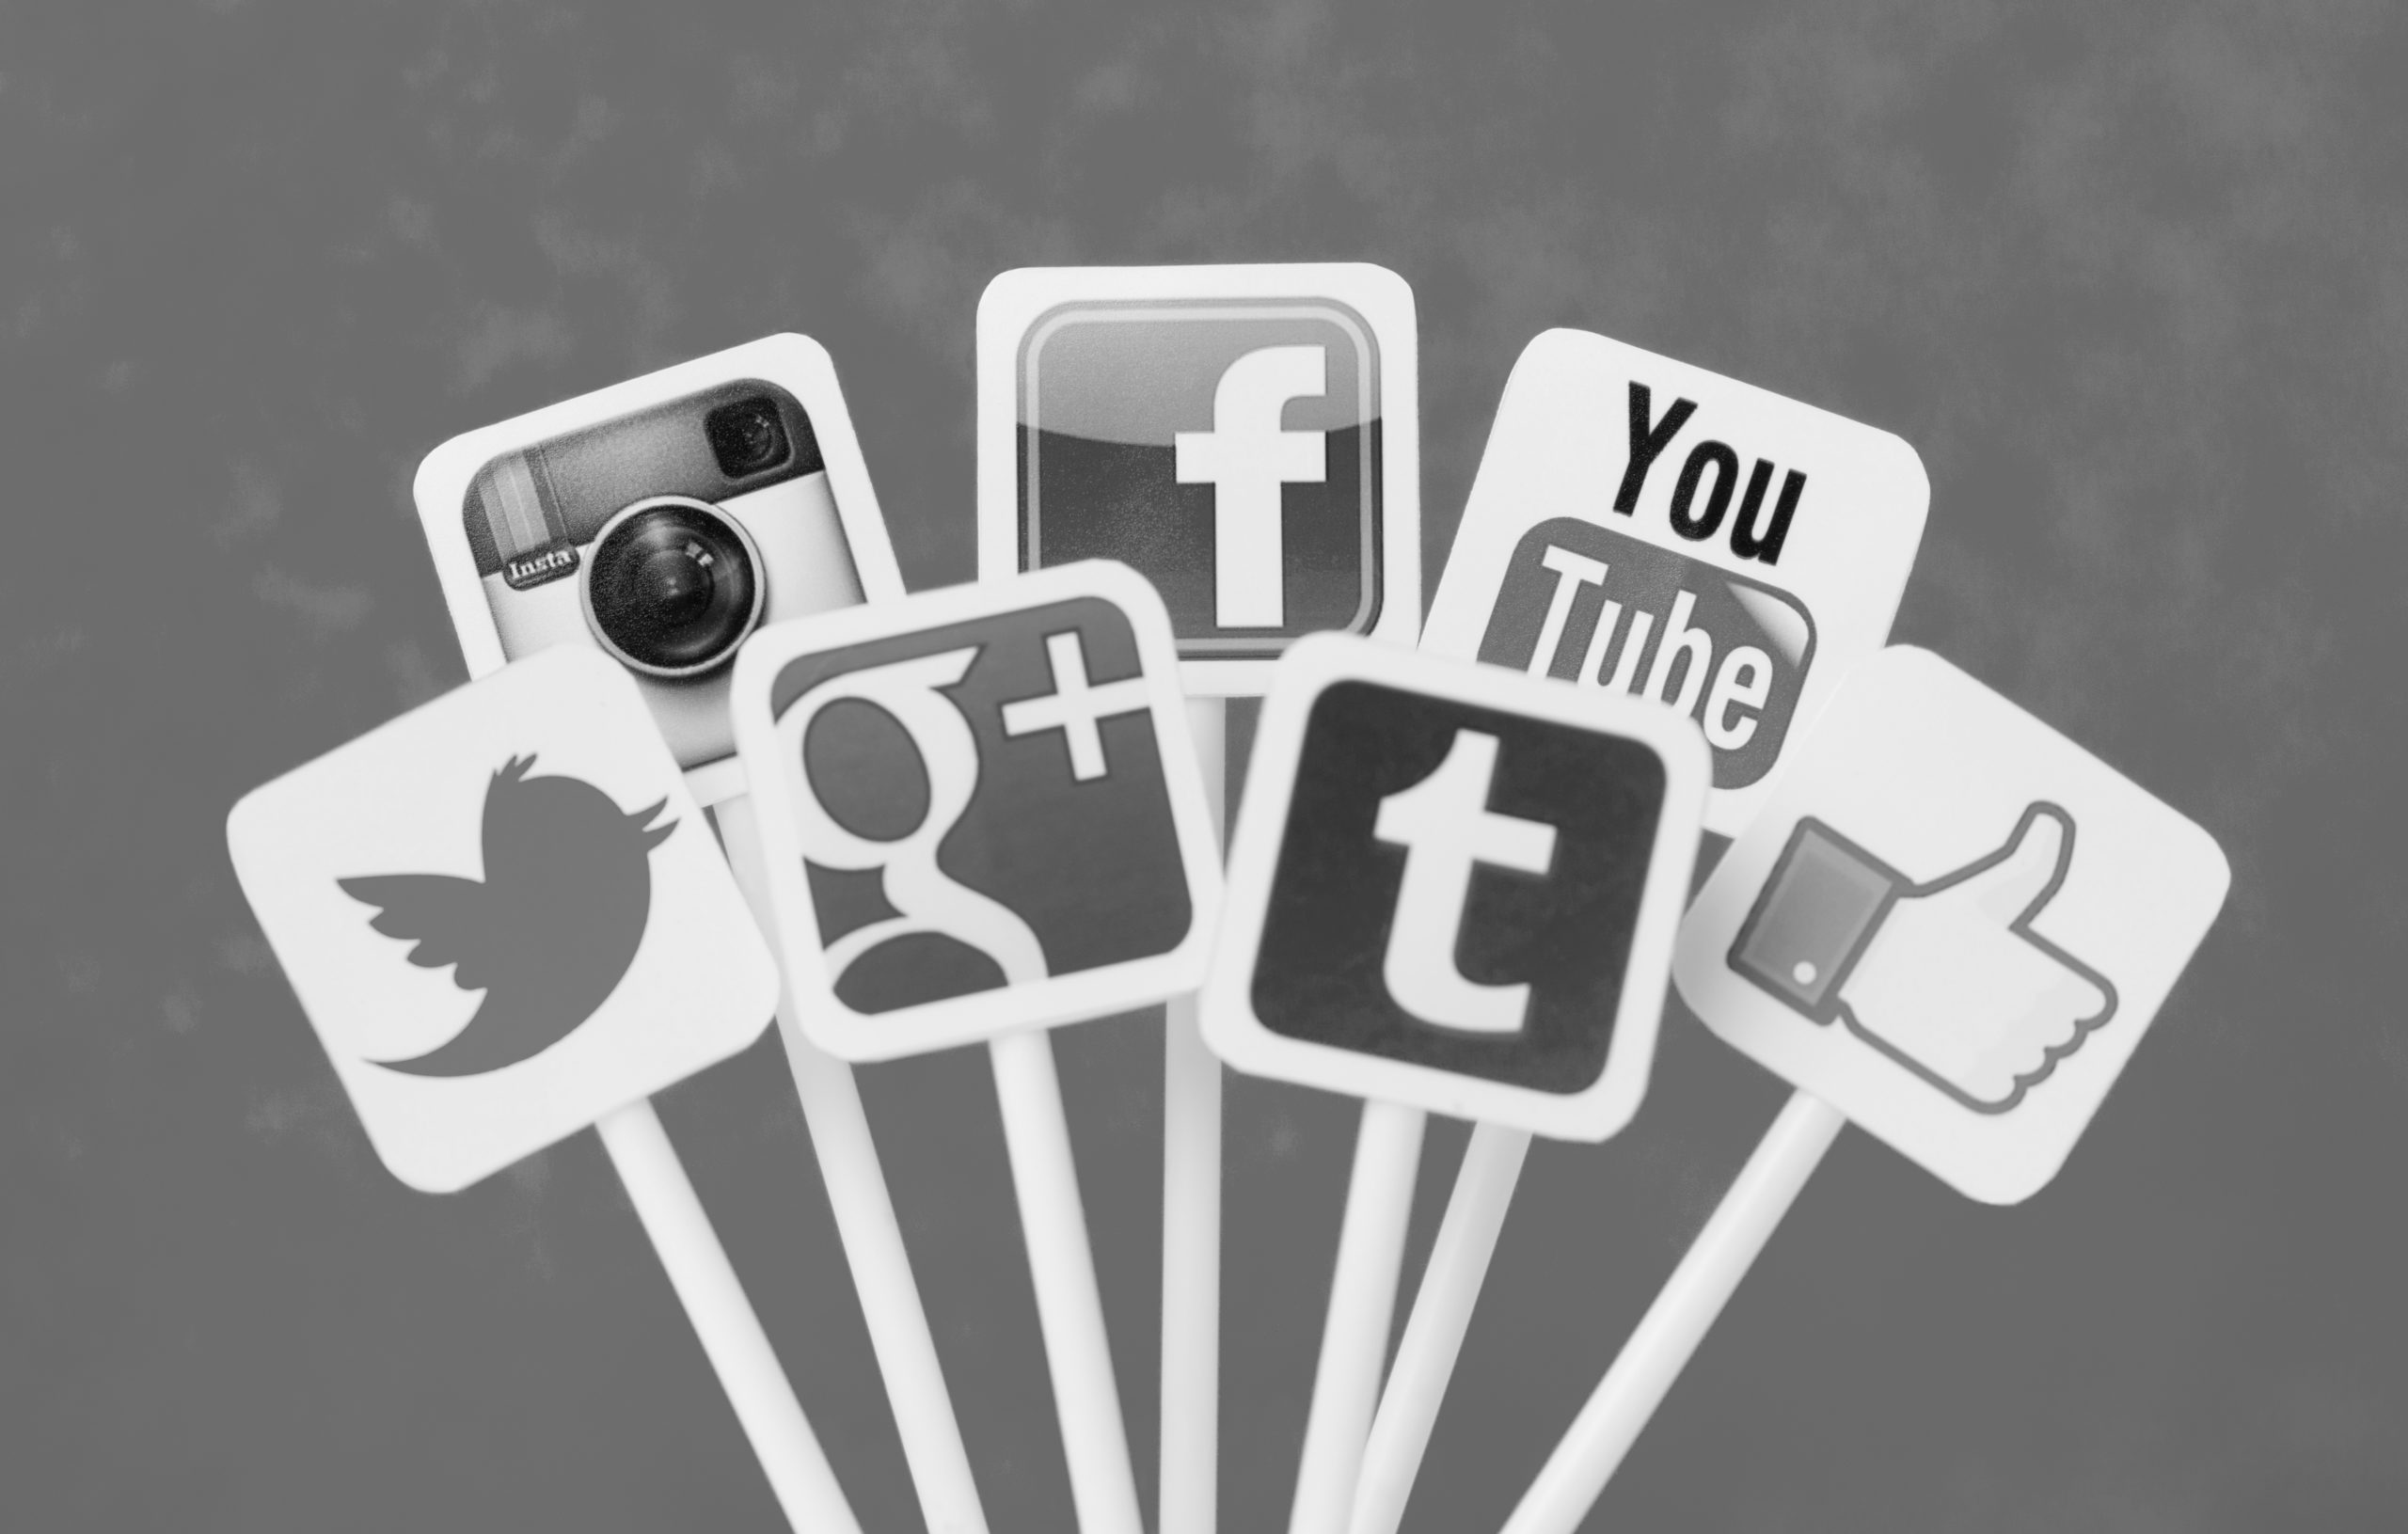 Logos for Instagram, Facebook, YouTube, Twitter, Google+, and Tumblr